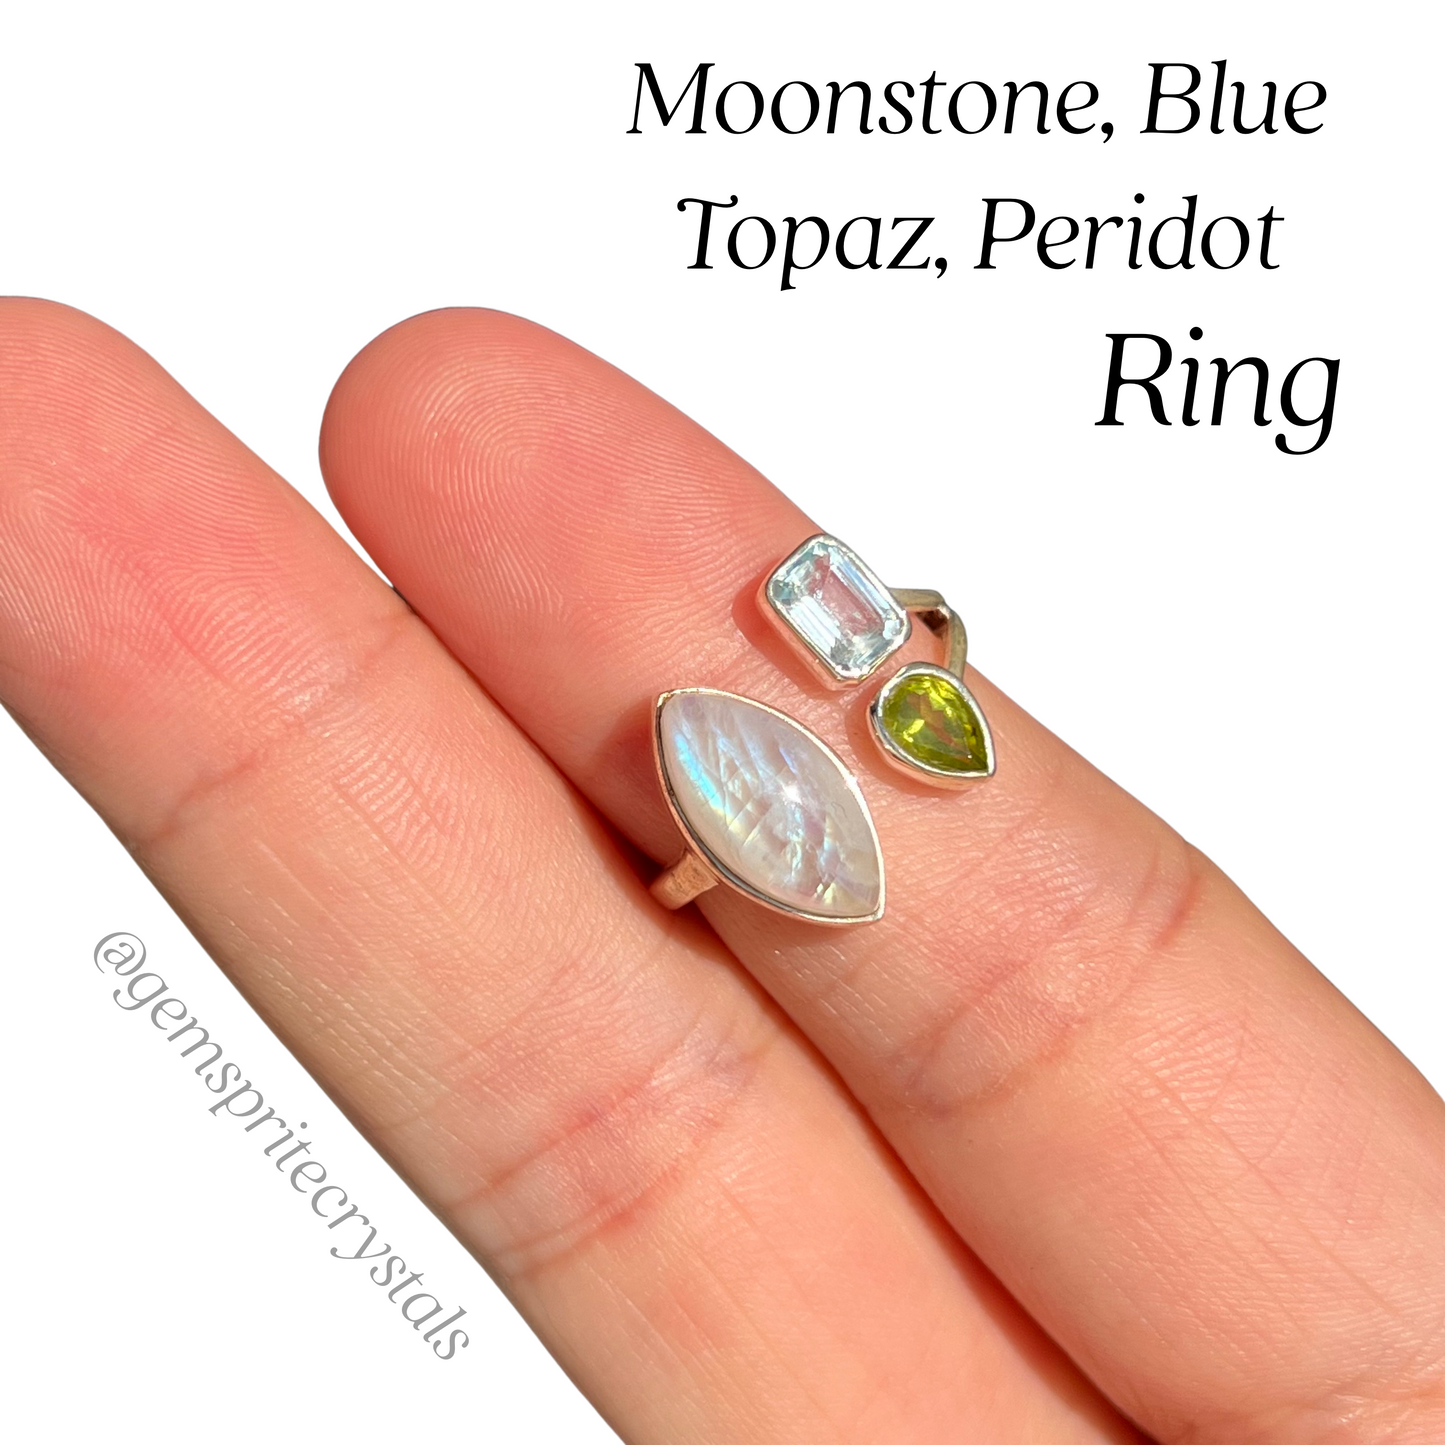 Moonstone, Blue Topaz, Peridot Ring